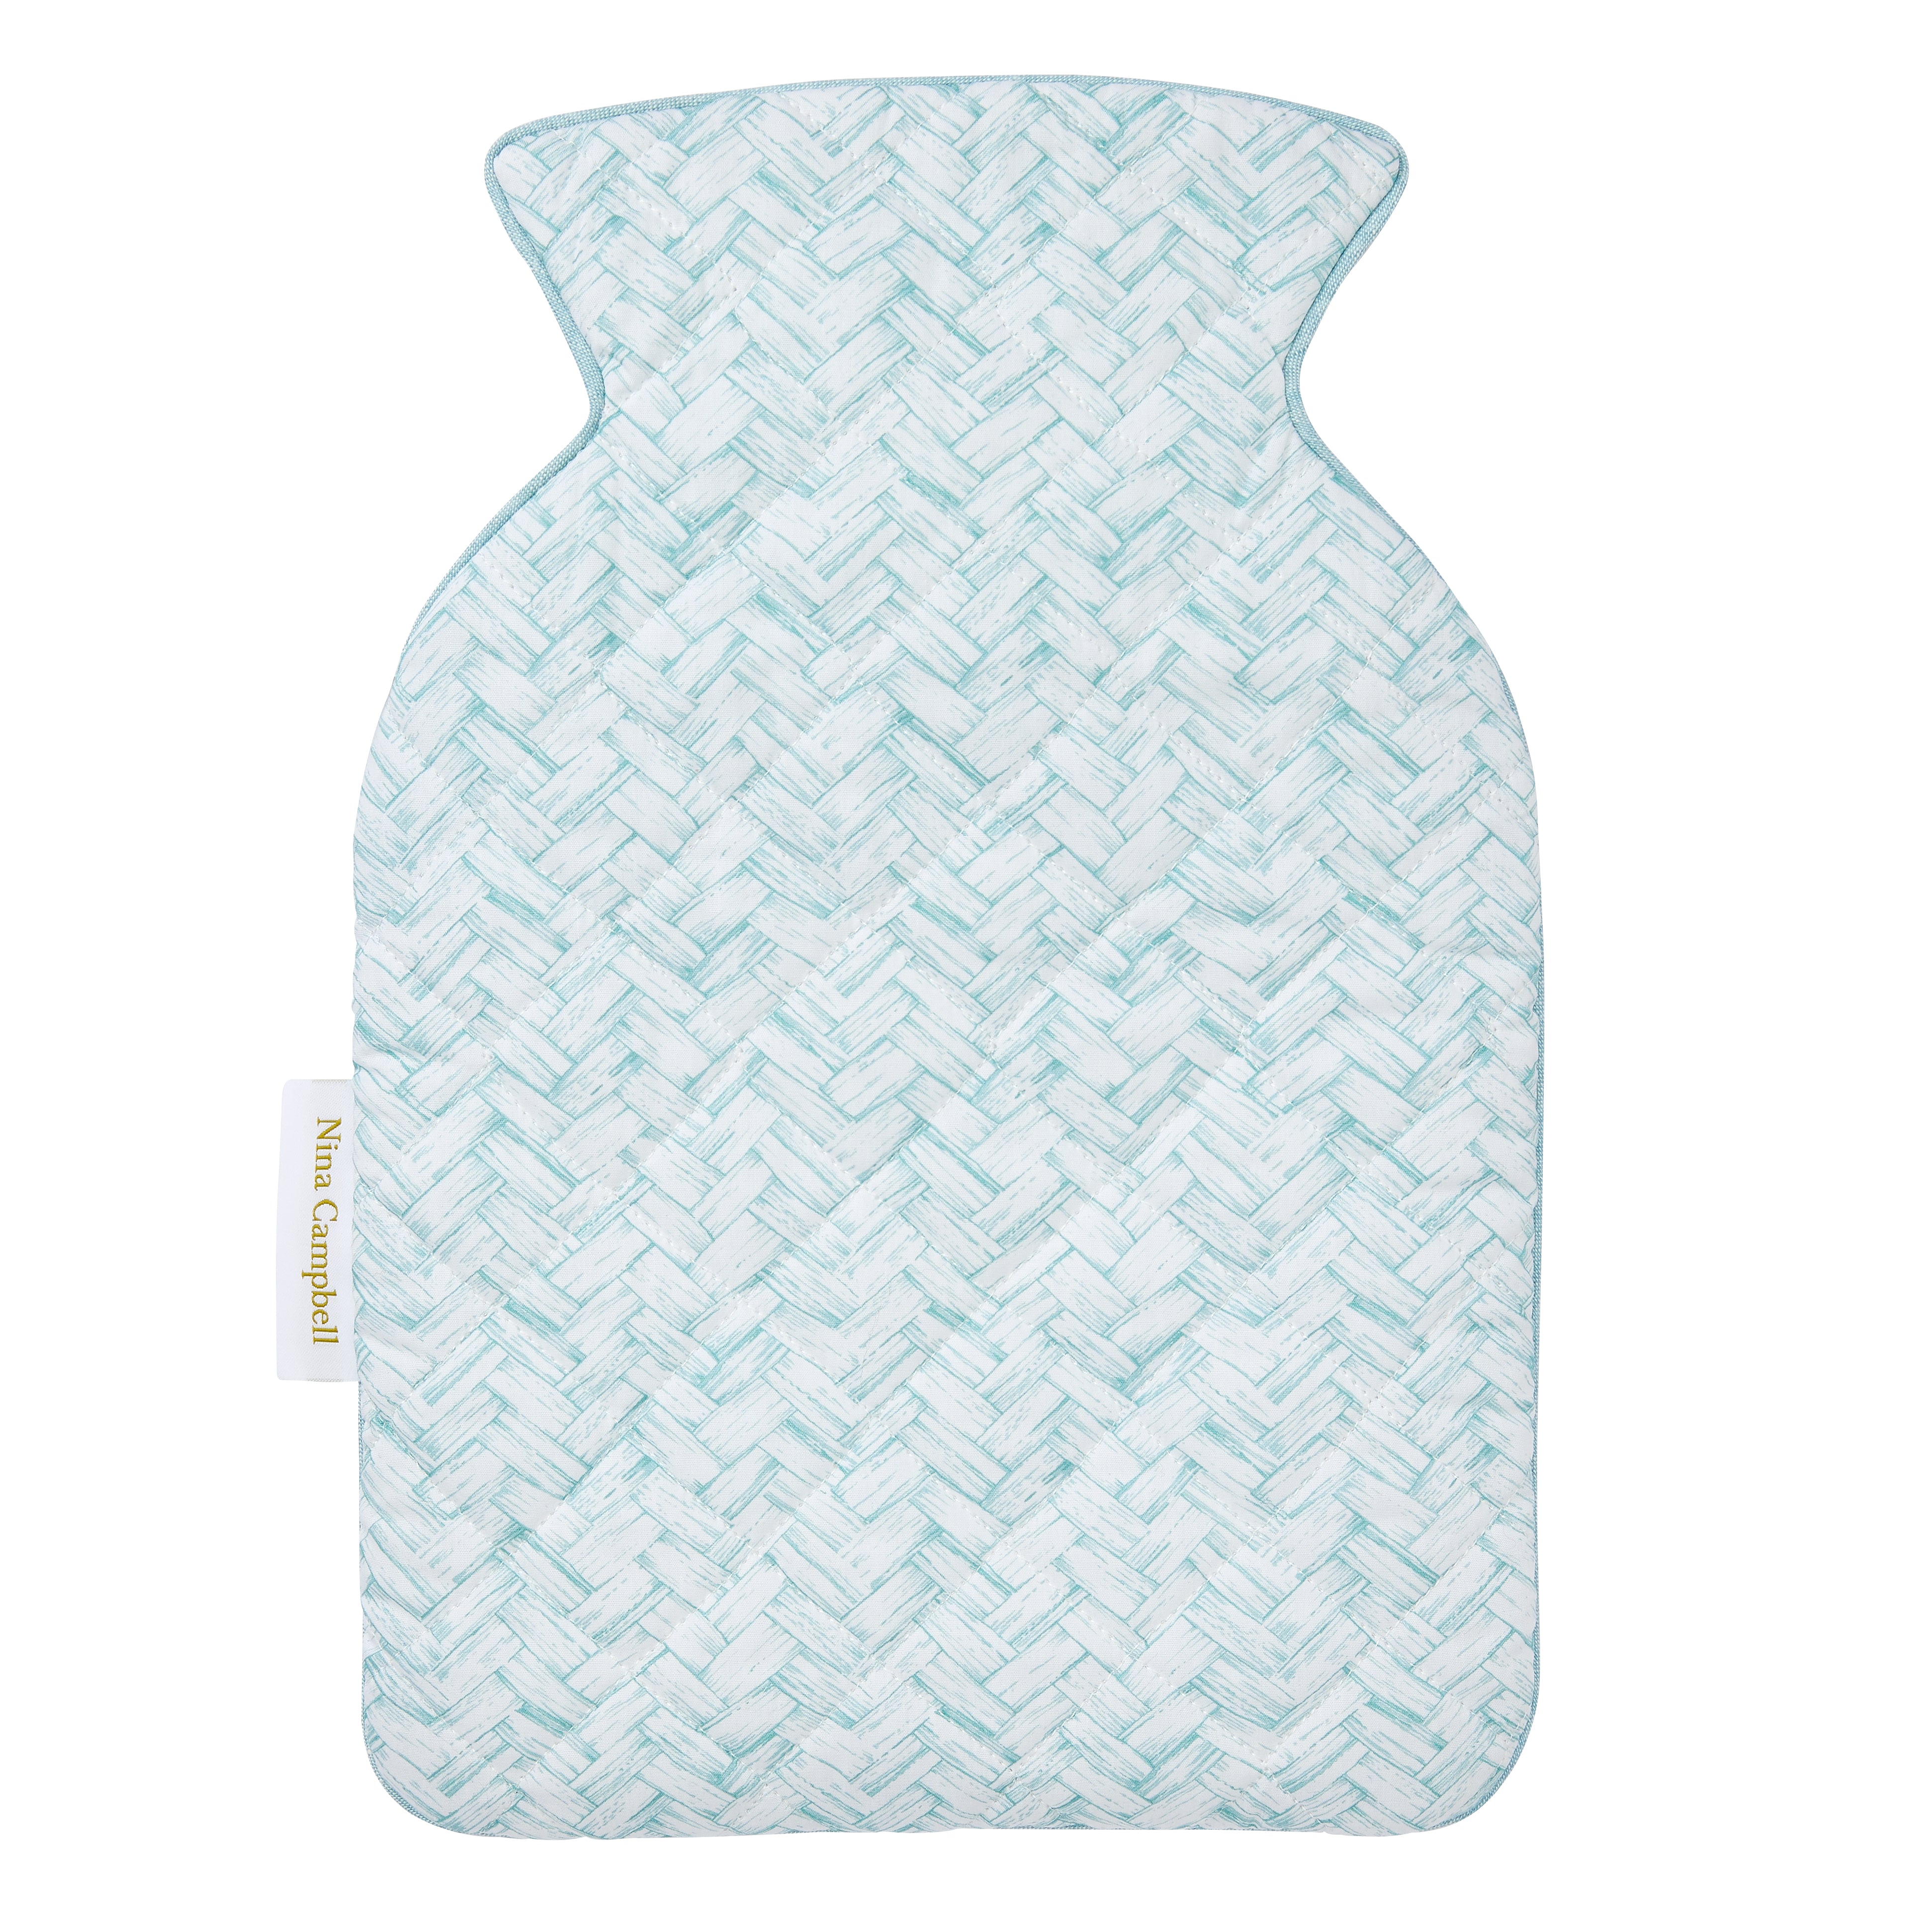 Hot Water Bottle Cover - Basketweave Aqua